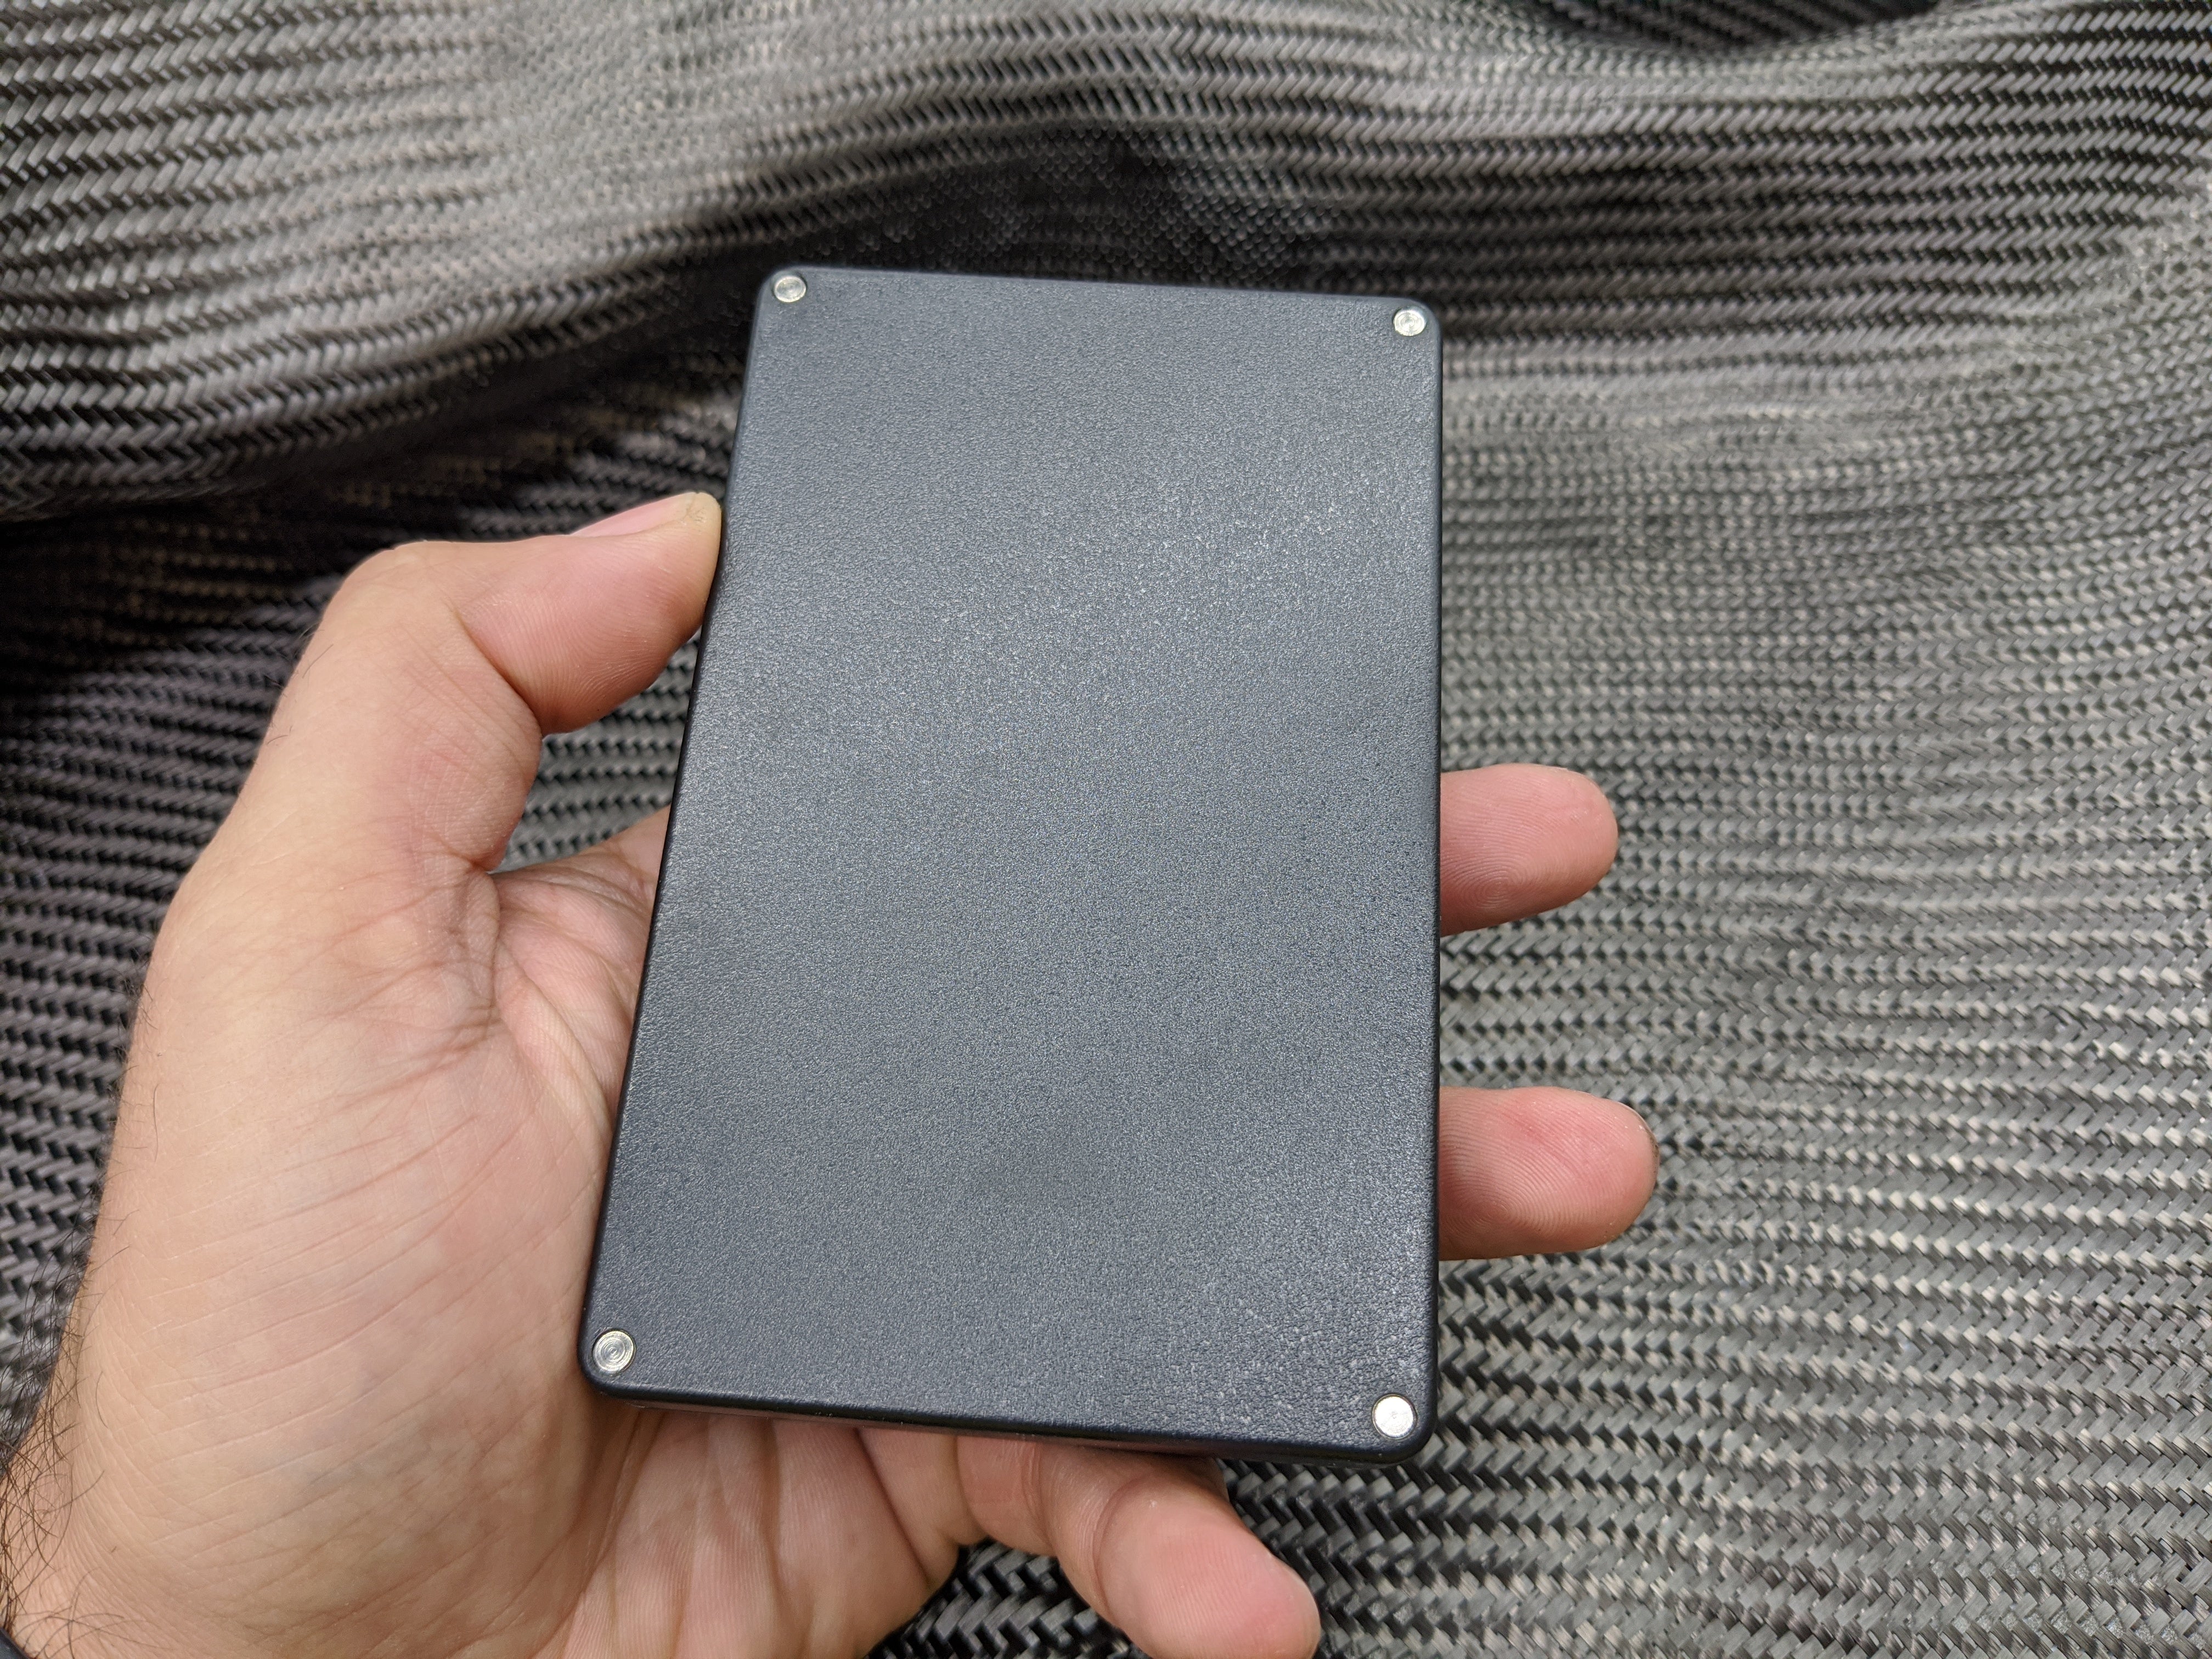 Moray Driver Kit - 32 Precision Bits for Smartphones & Small Electronics Repair